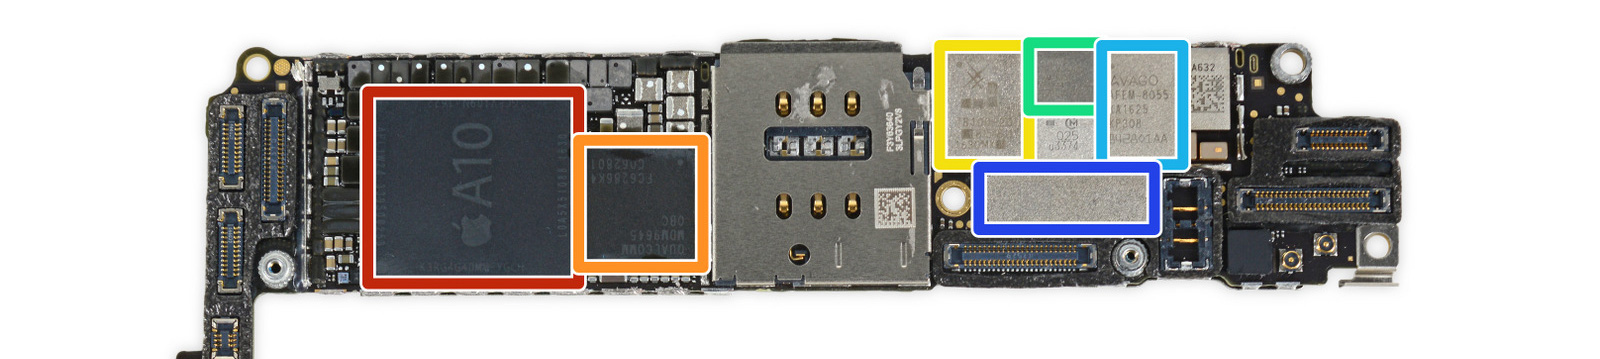 Early Iphone 7 Teardowns Intel Qualcomm Modems Tsmc Soc 2 To 3 Gb Of Ram